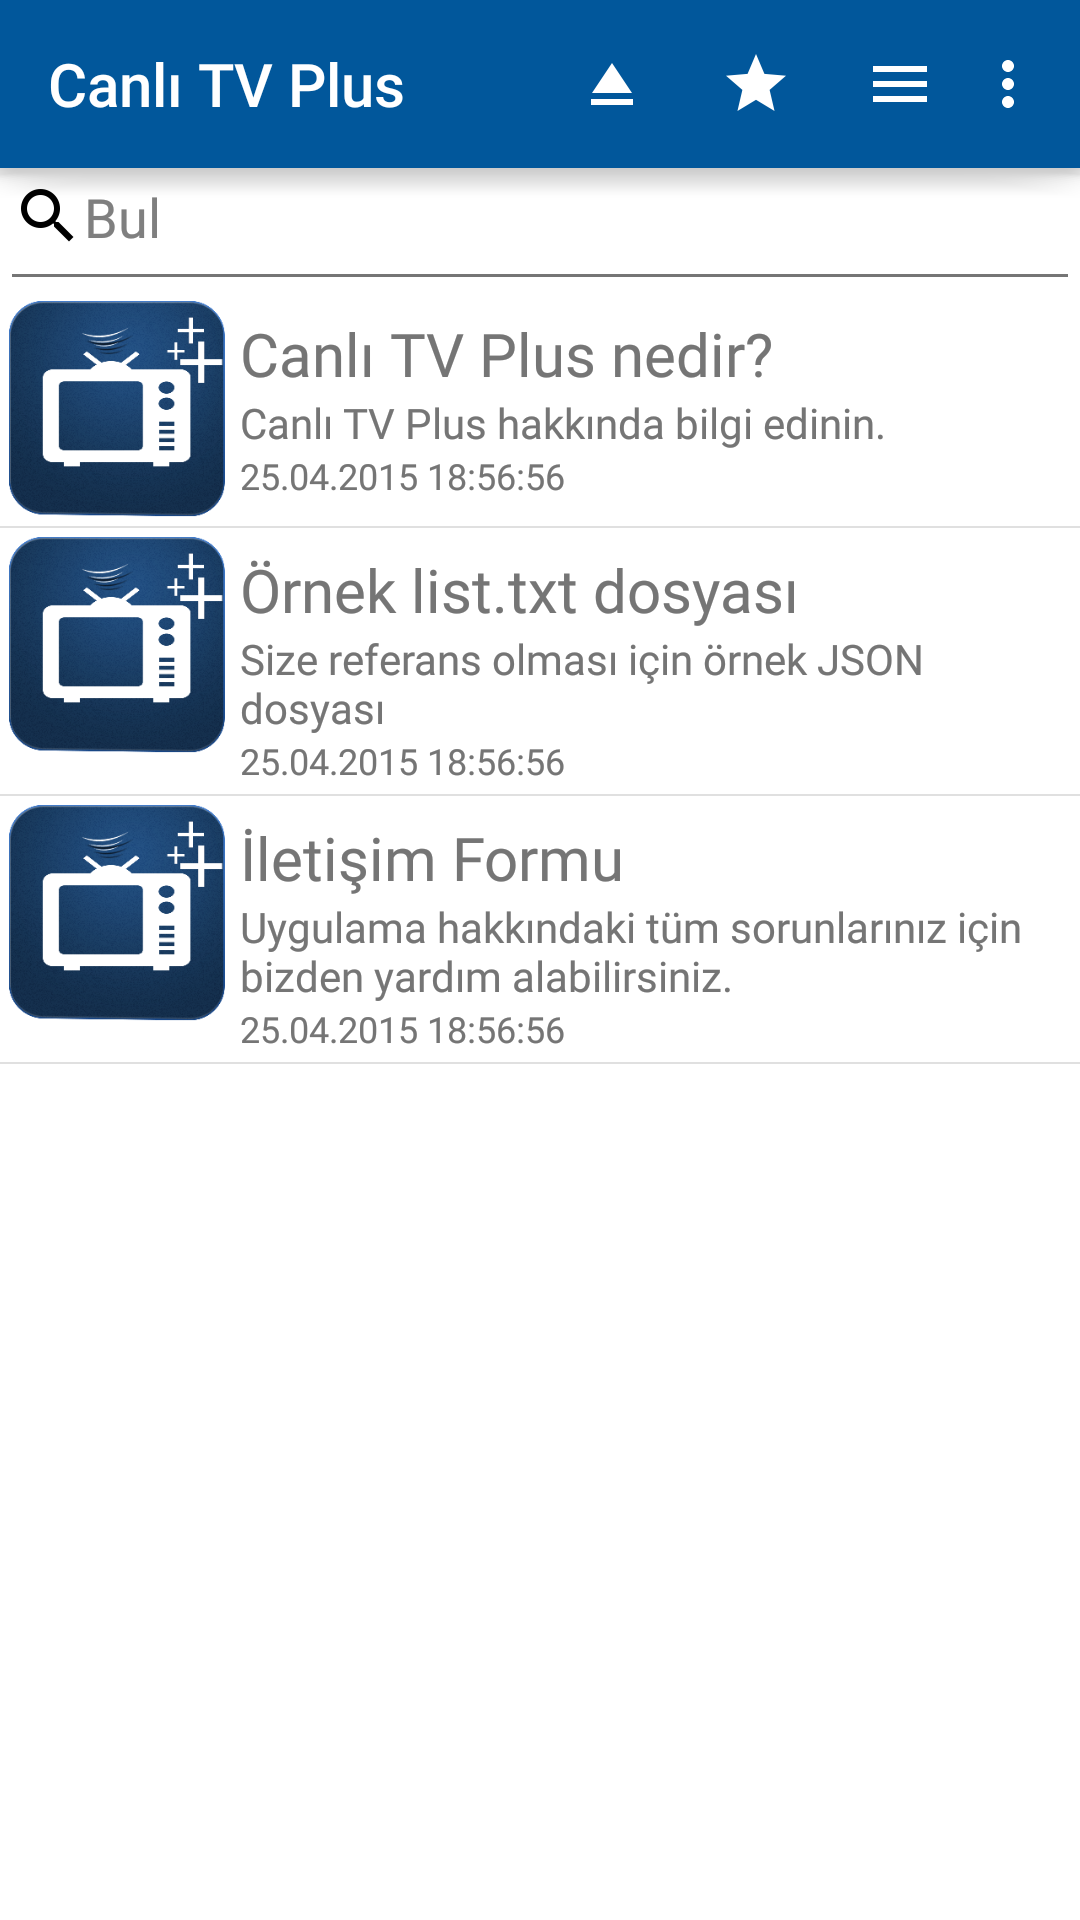 Canlı TV Plus APK 9.0.1 for Android – Download Canlı TV Plus APK Latest  Version from APKFab.com